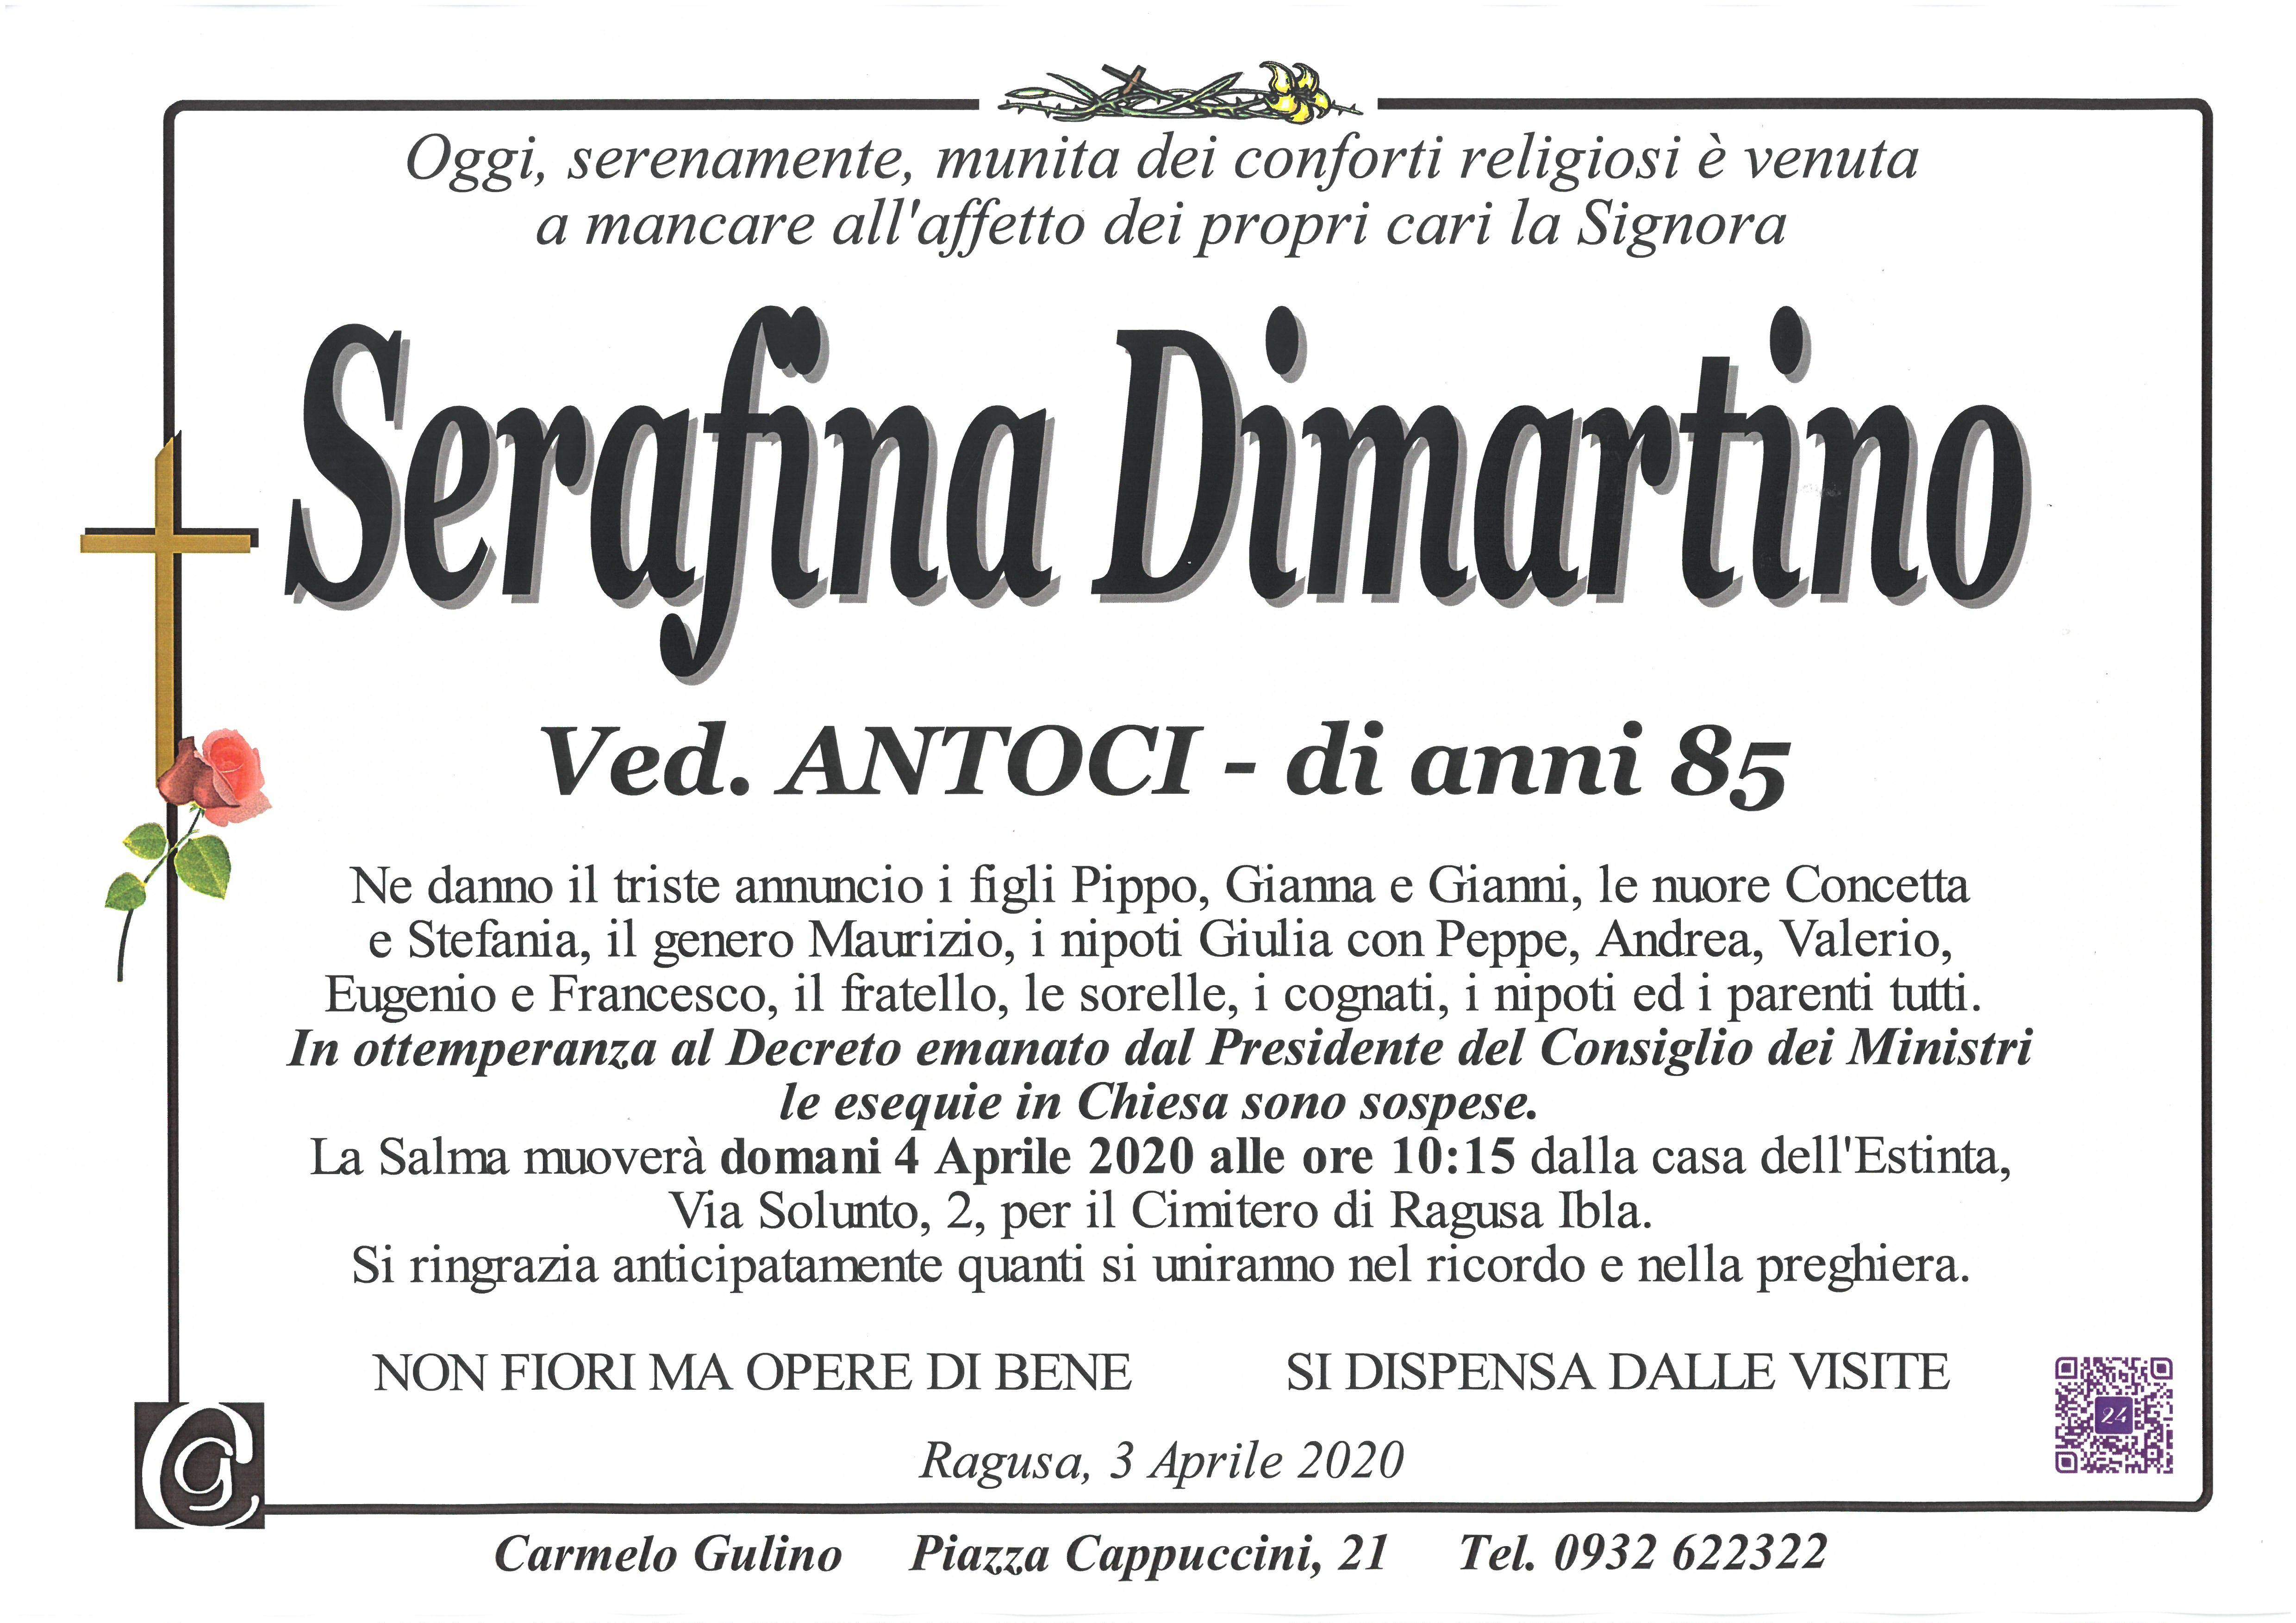 Serafina Dimartino